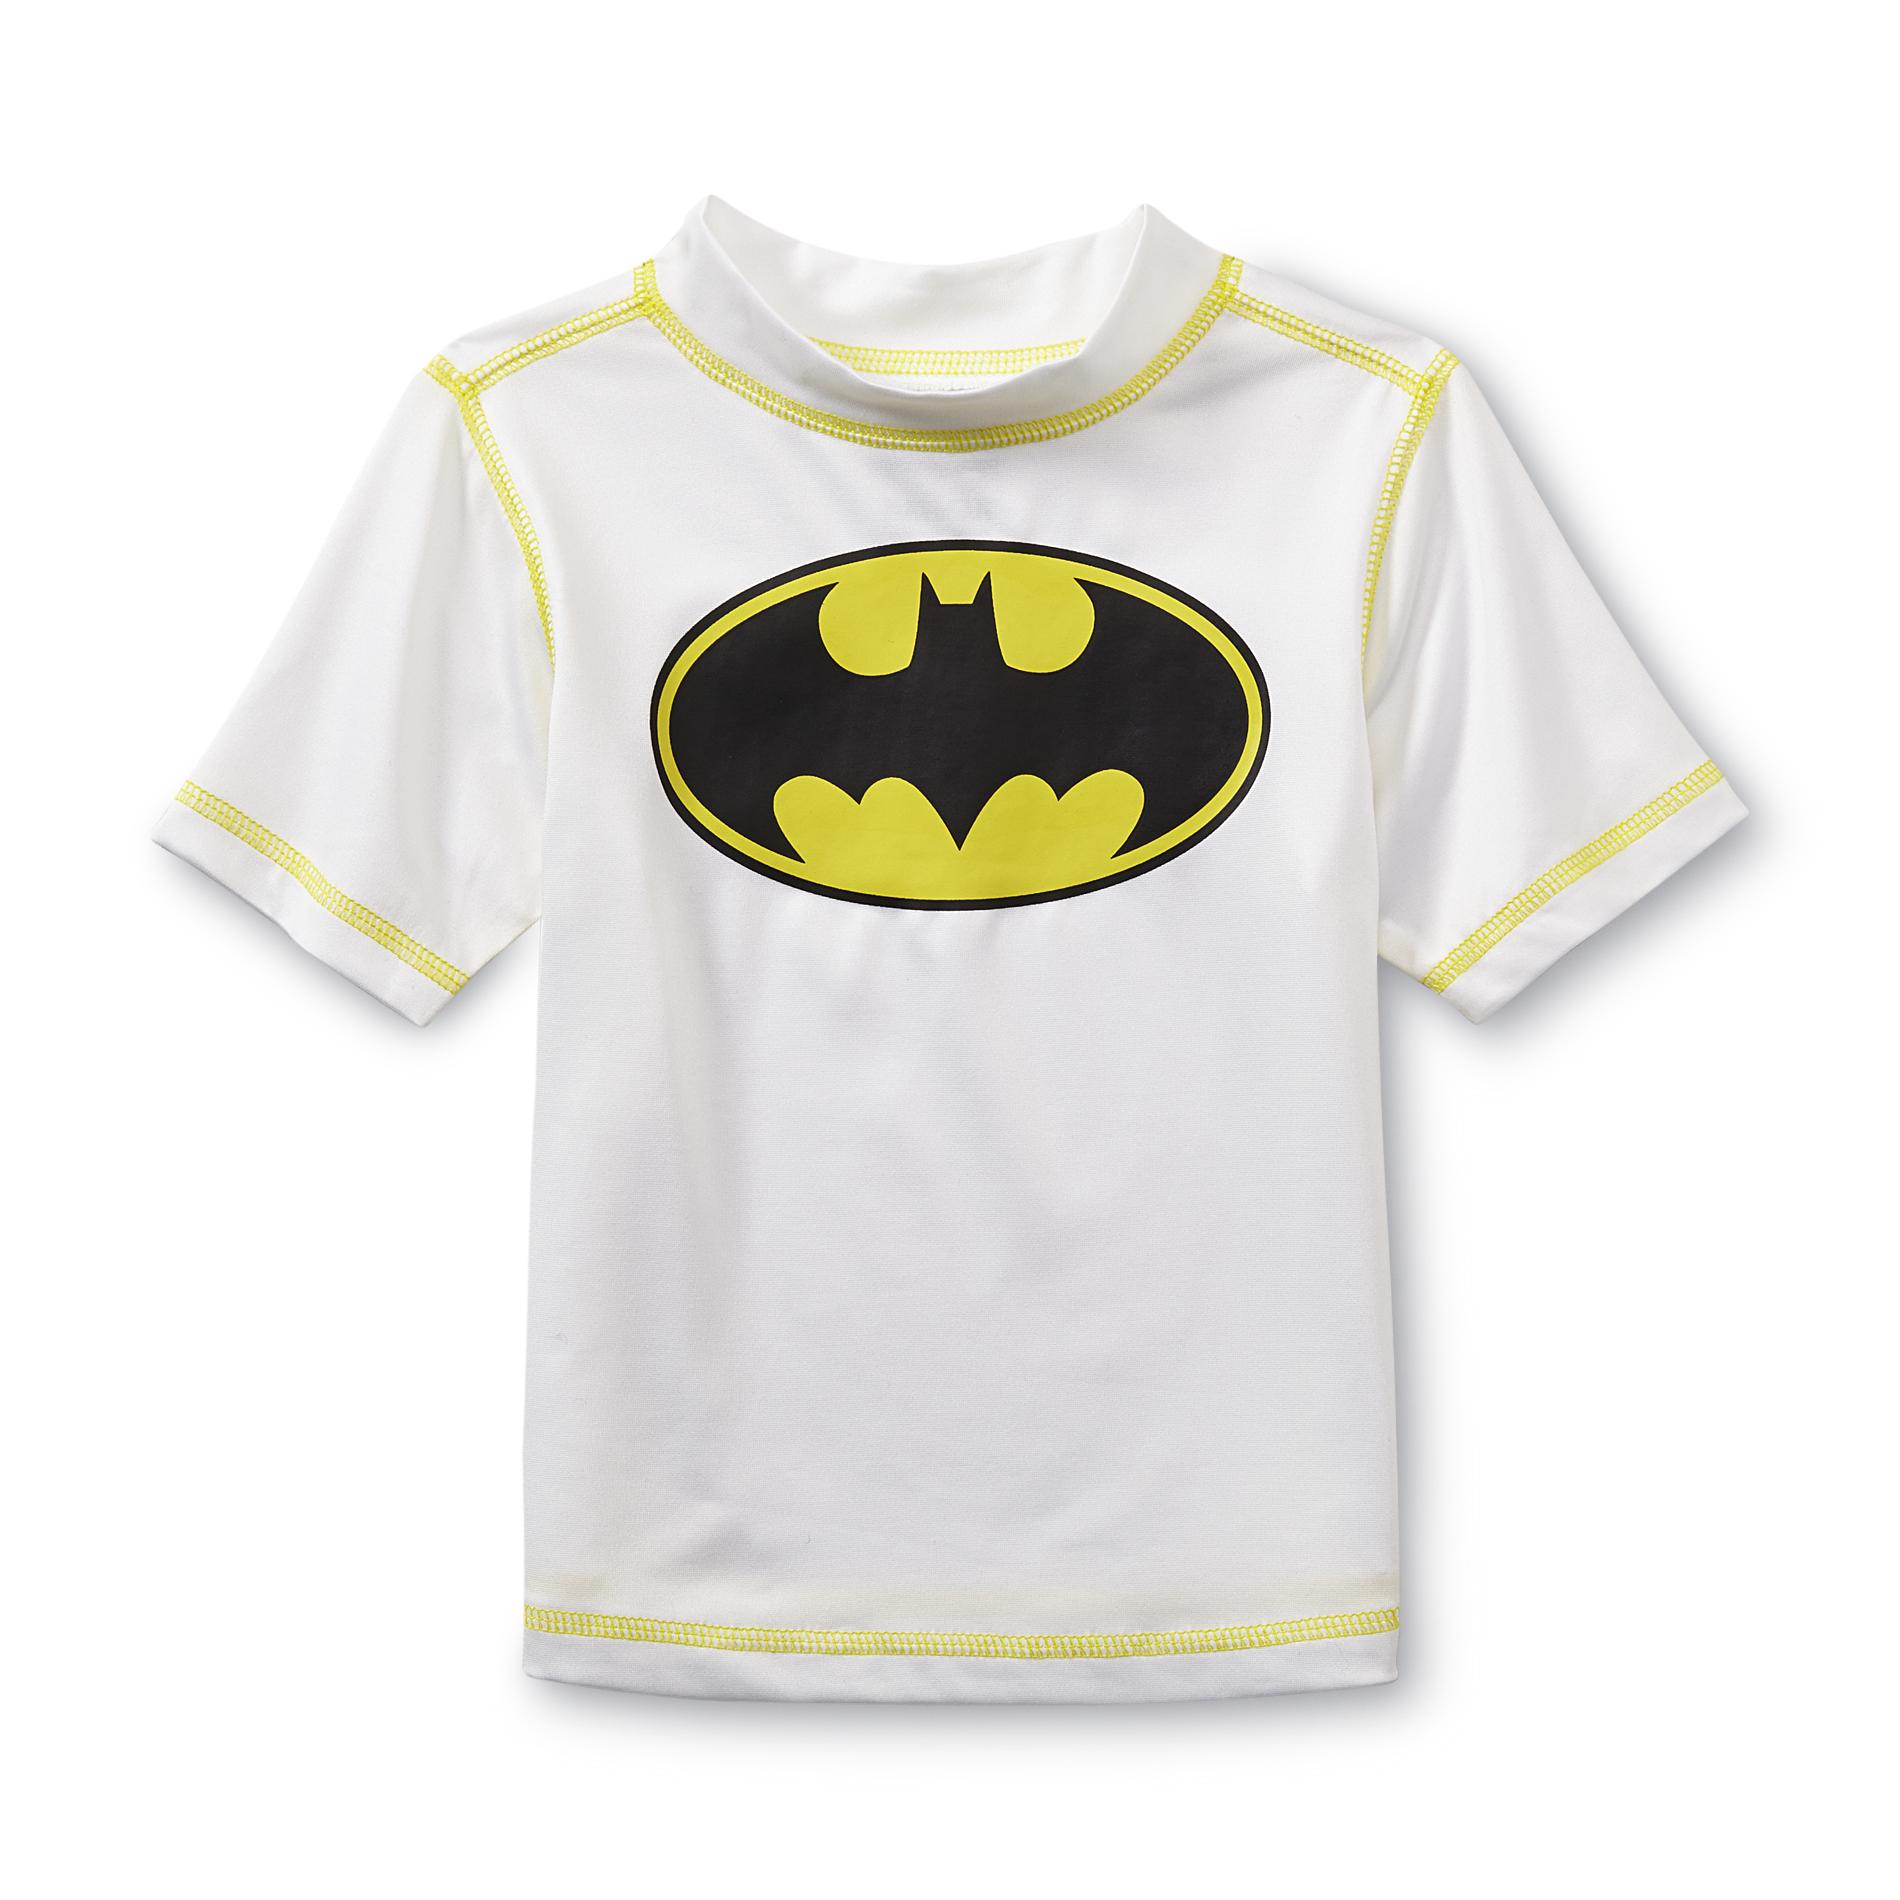 DC Comics Batman Toddler Boy's Rashguard Swim Shirt